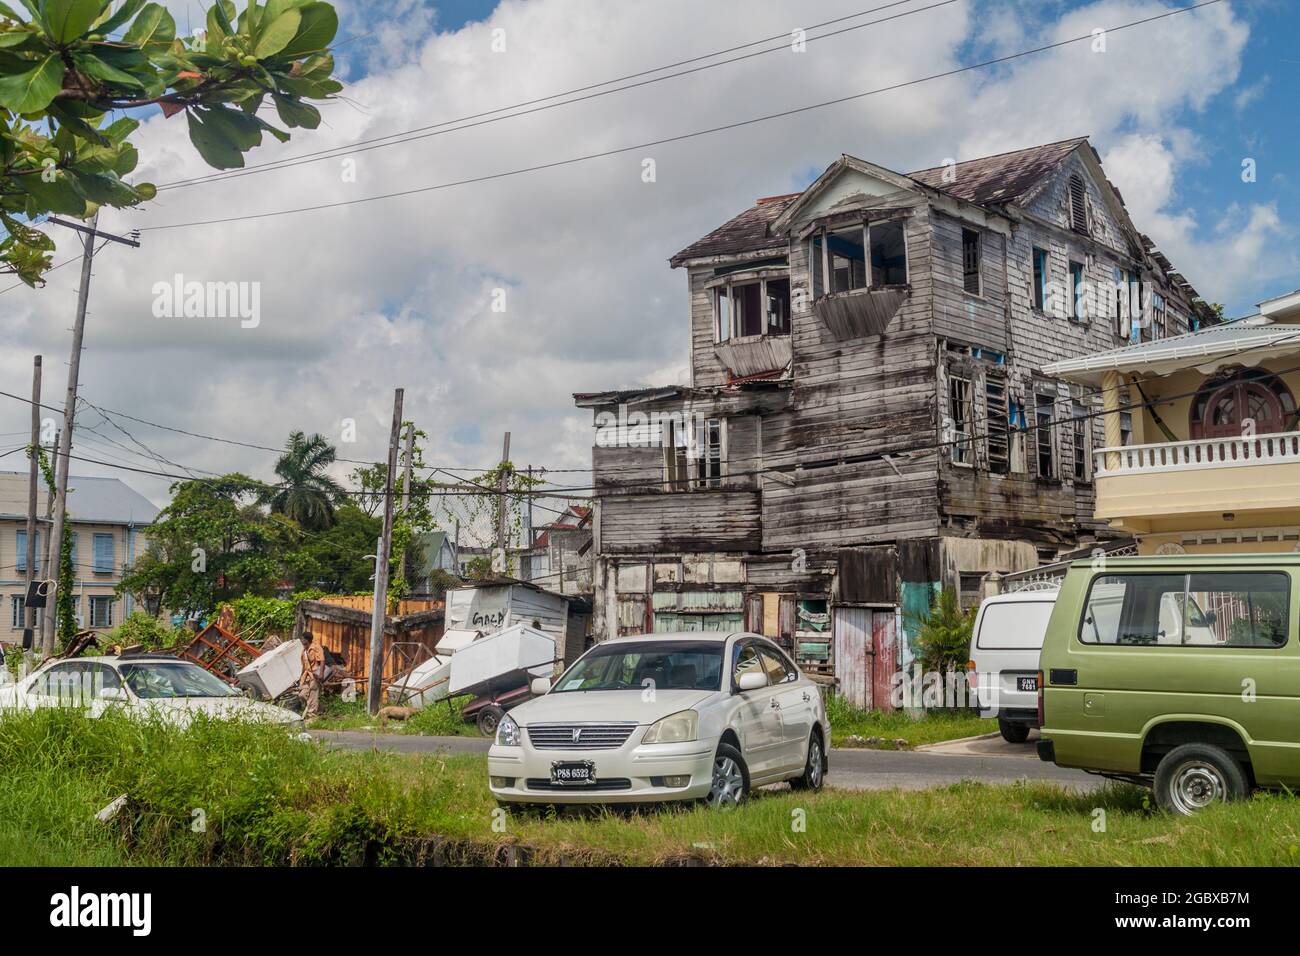 GEORGETOWN, GUYANA - AUGUST 10, 2015: Old wooden house in Georgetown, capital of Guyana Stock Photo